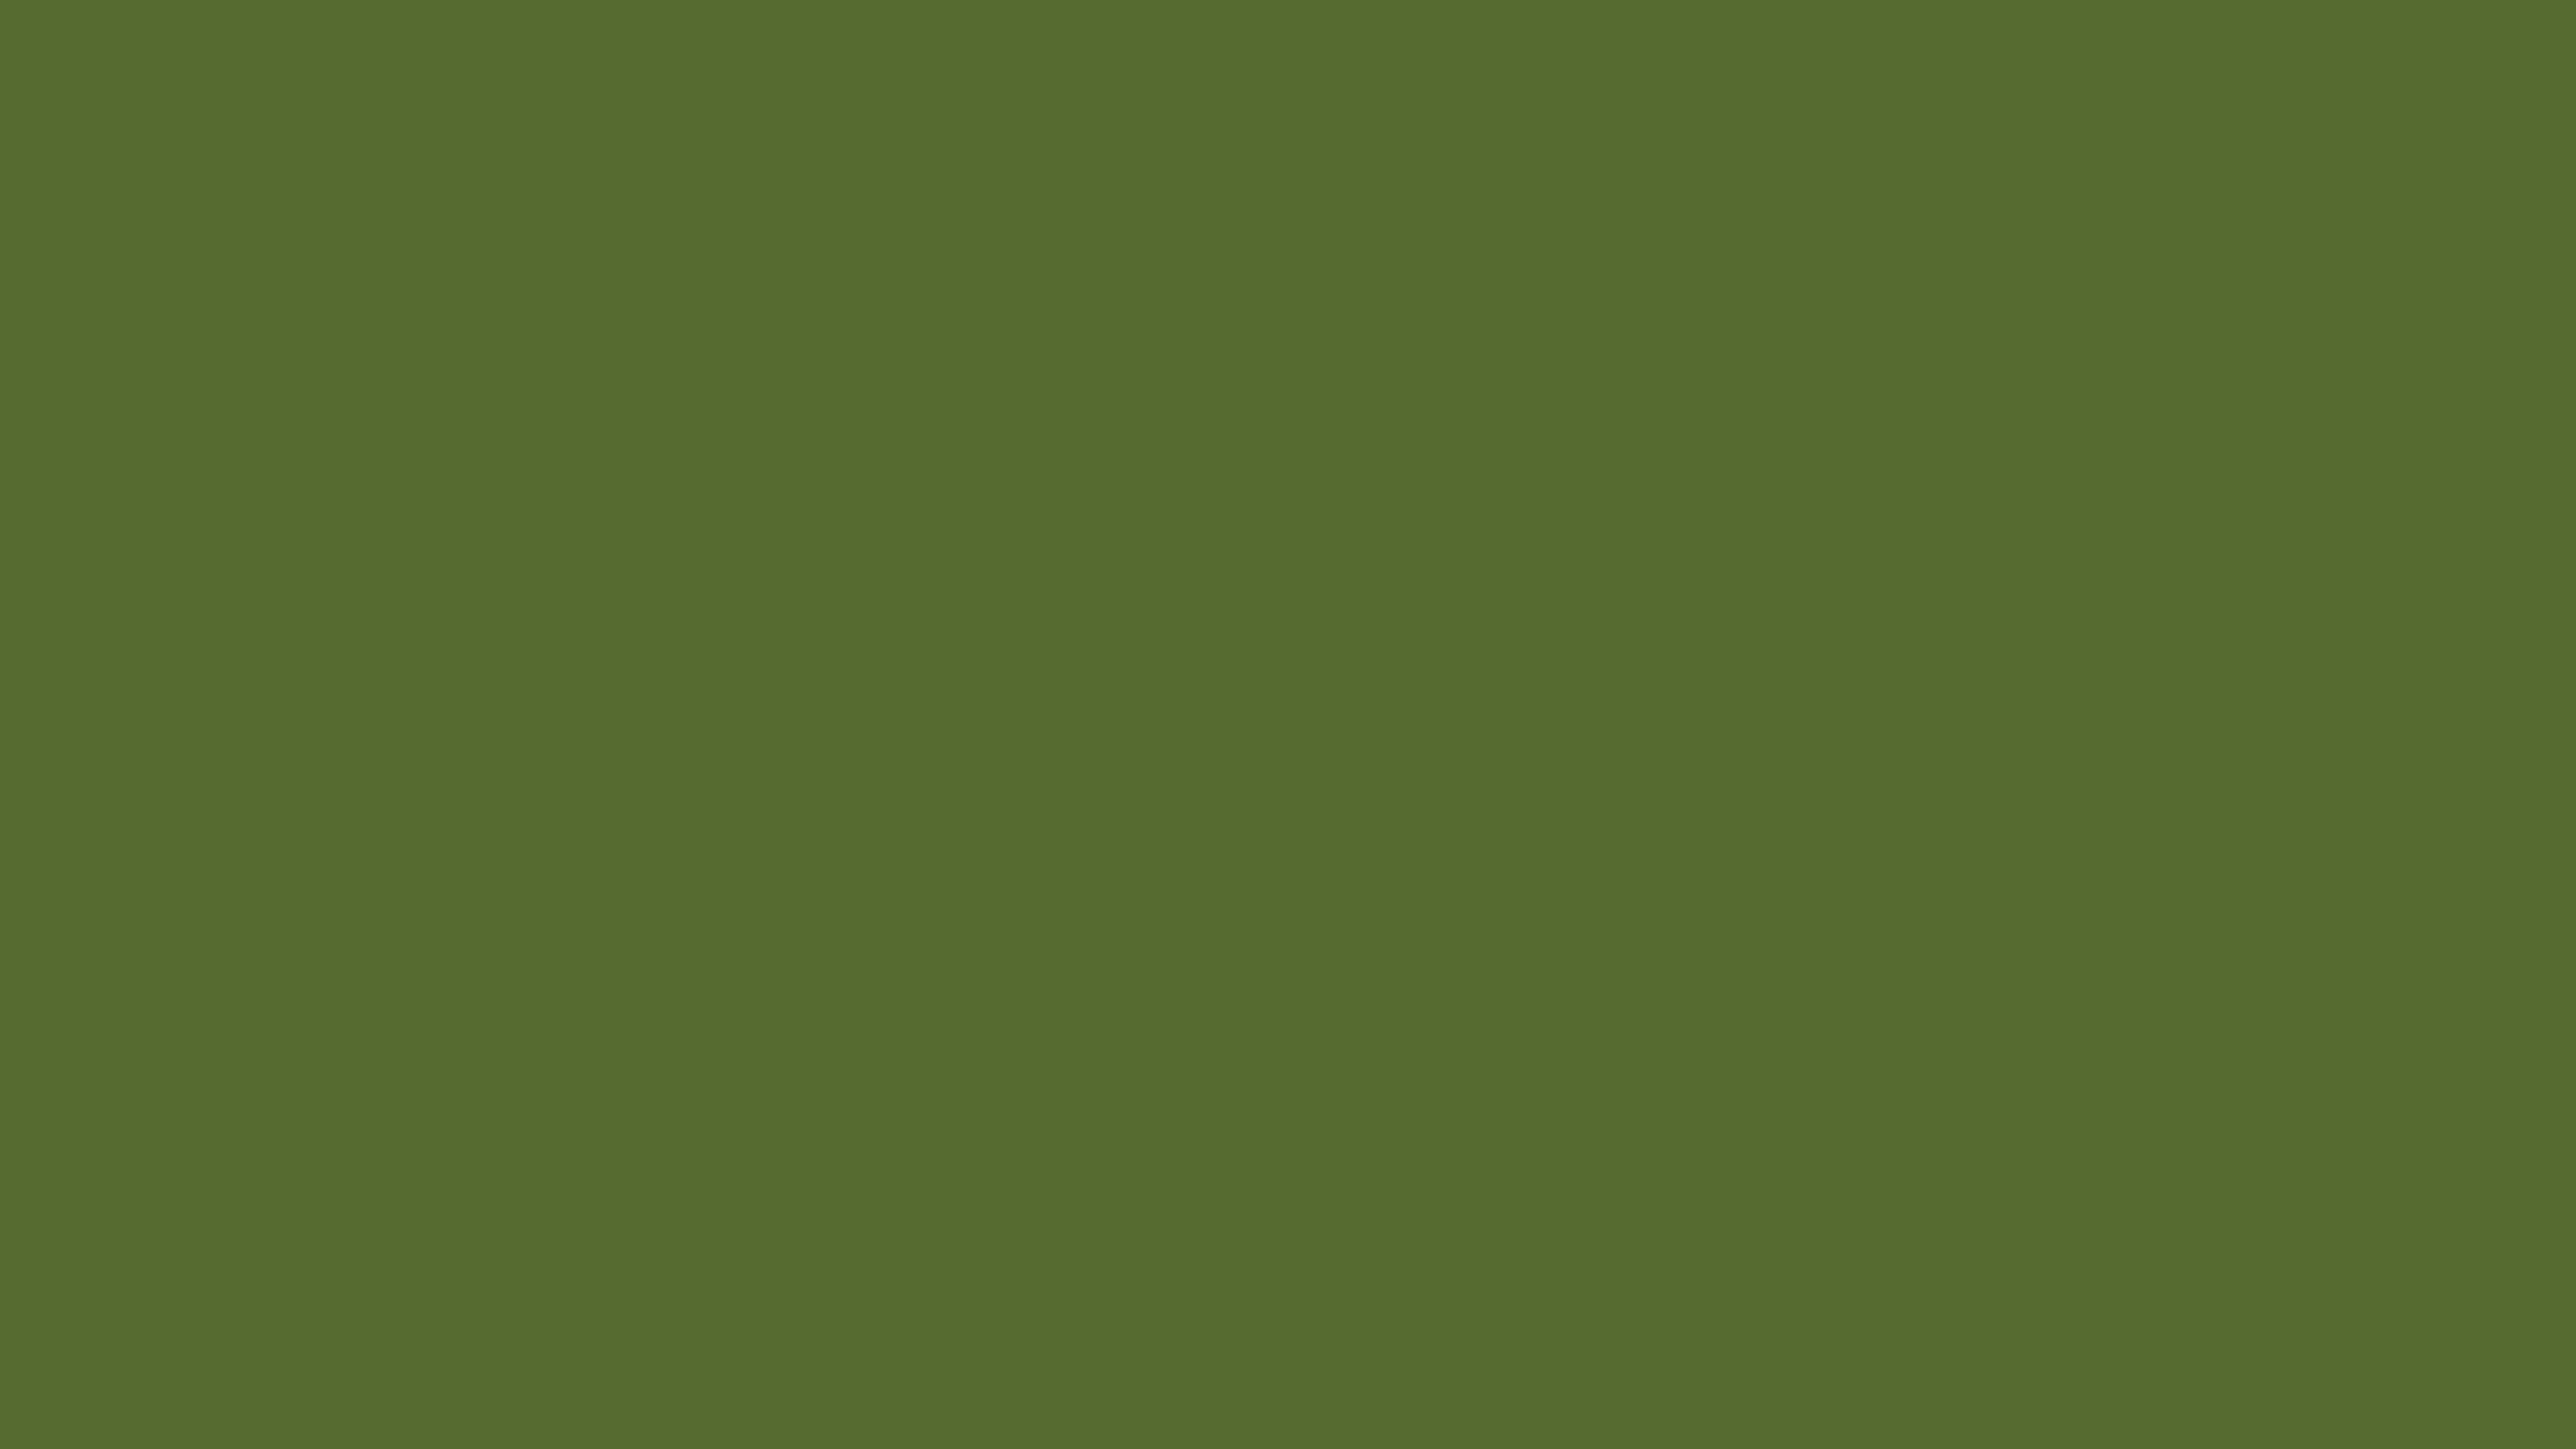 3840x2160 Dark Olive Green Solid Color Background